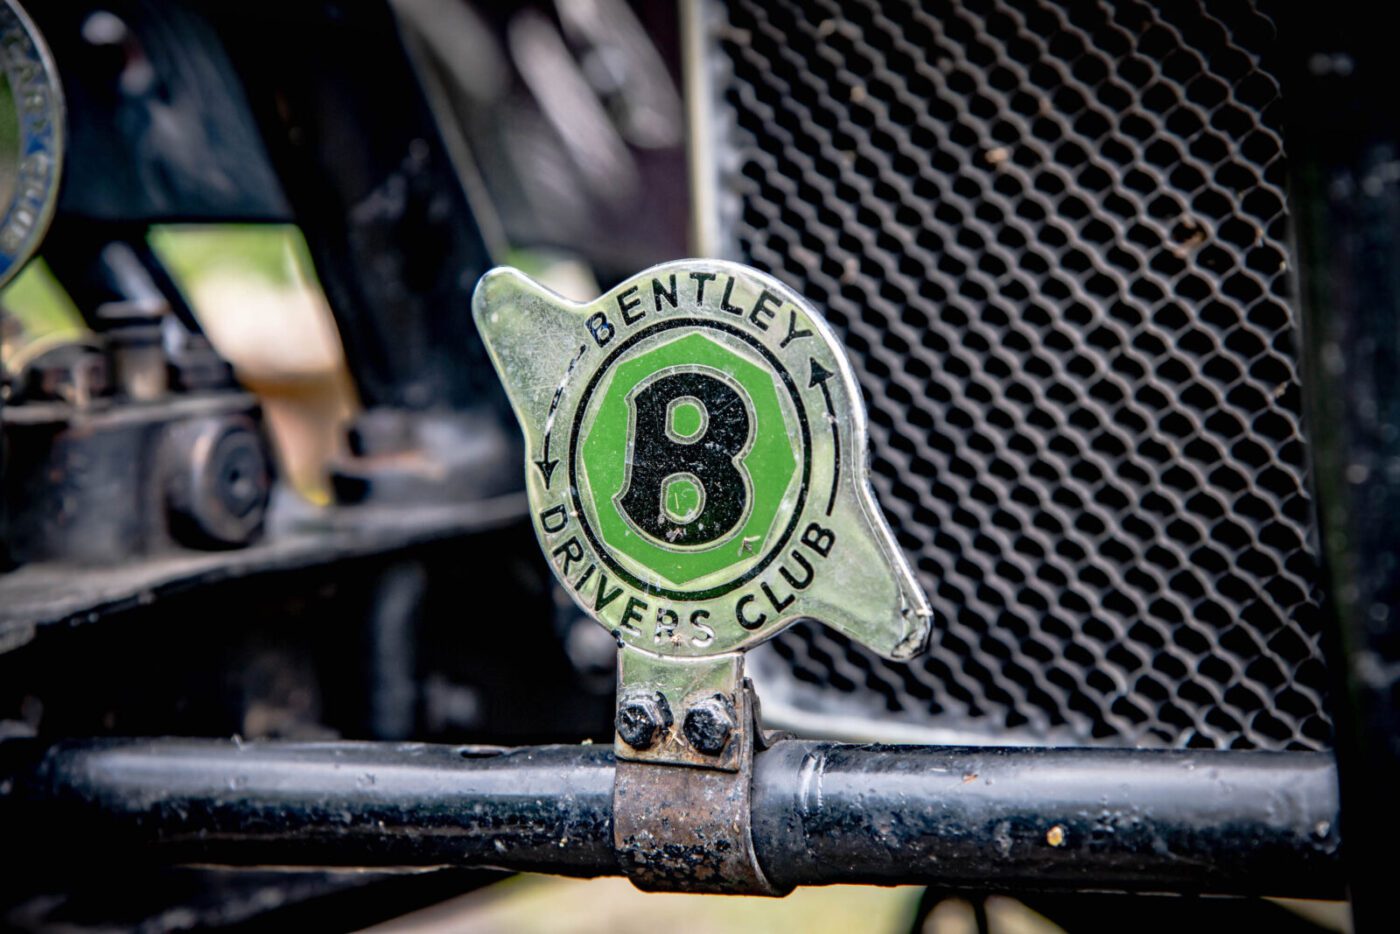 Bentley Drivers Club badge